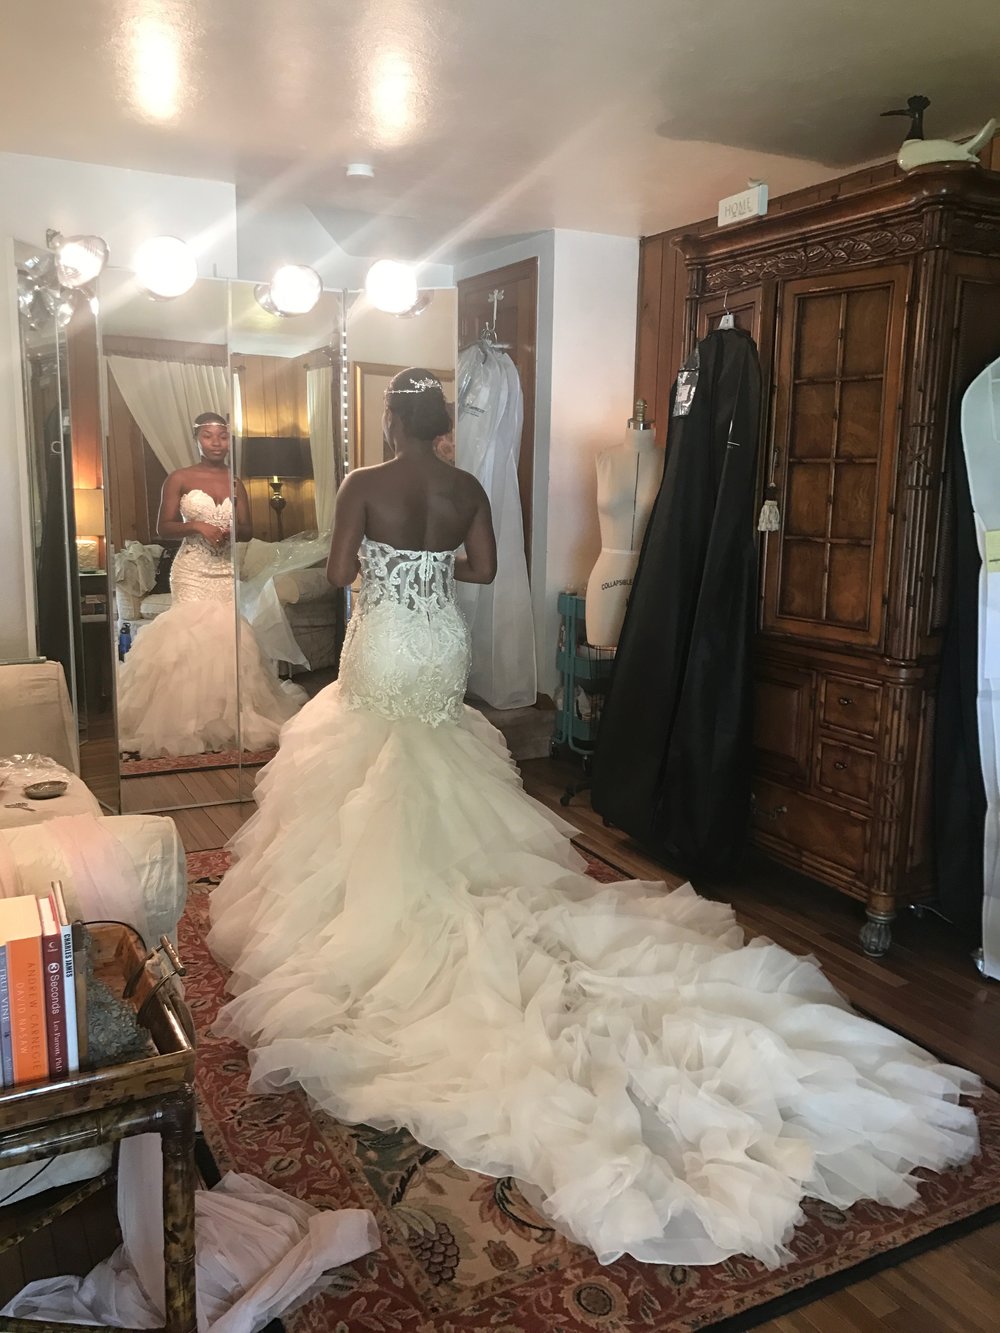 Black Destination Bride - BlackDesti Wedding Journal - Bridefriends Podcast -10 - dress fitting3 - 2 veils.JPG